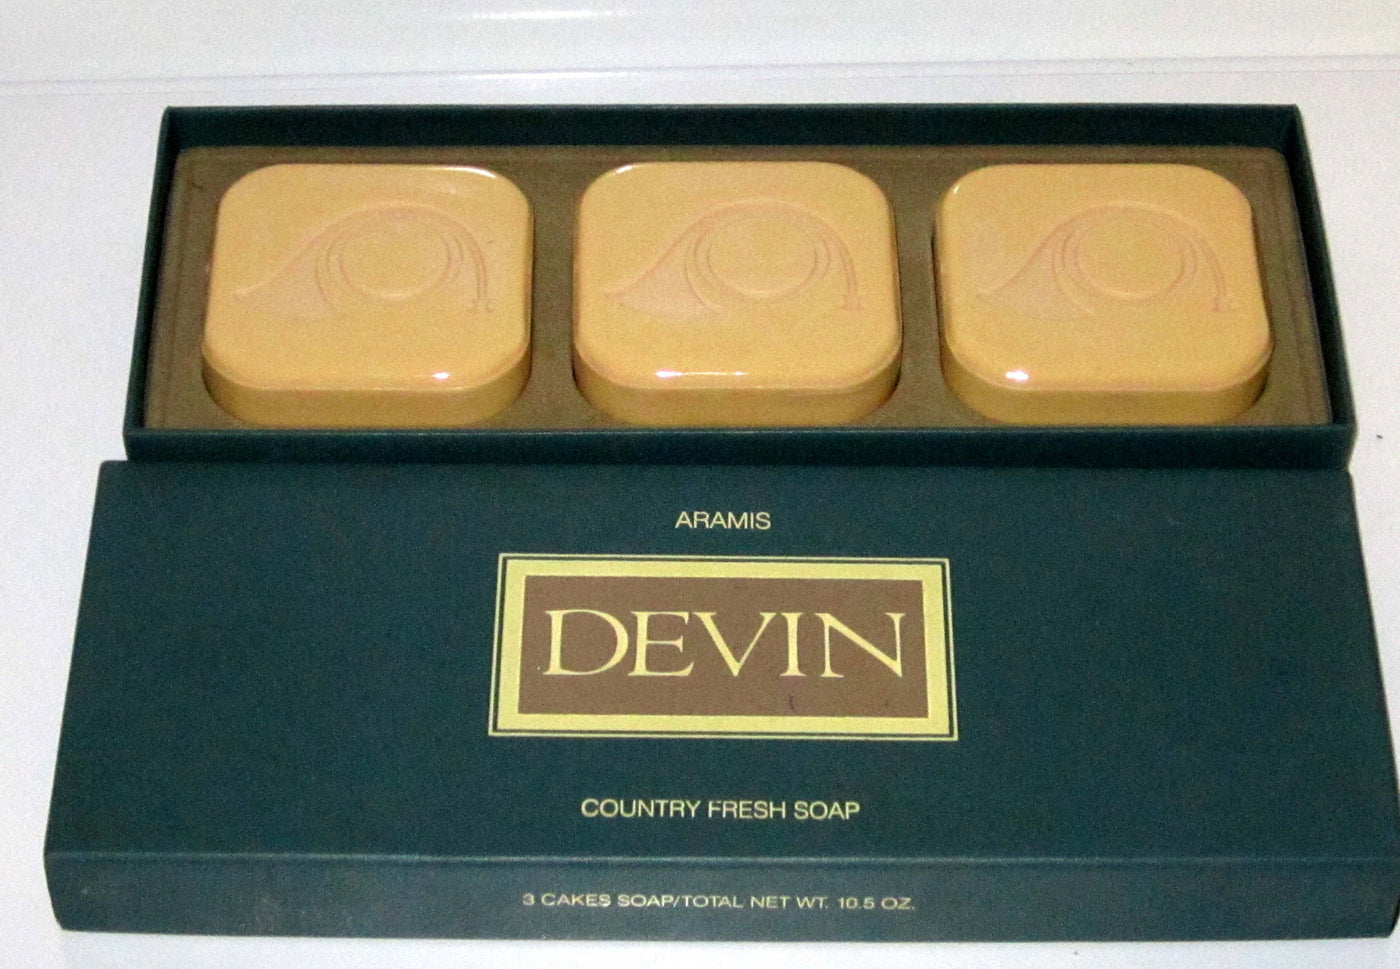 Aramis Devin Country Fresh Soap